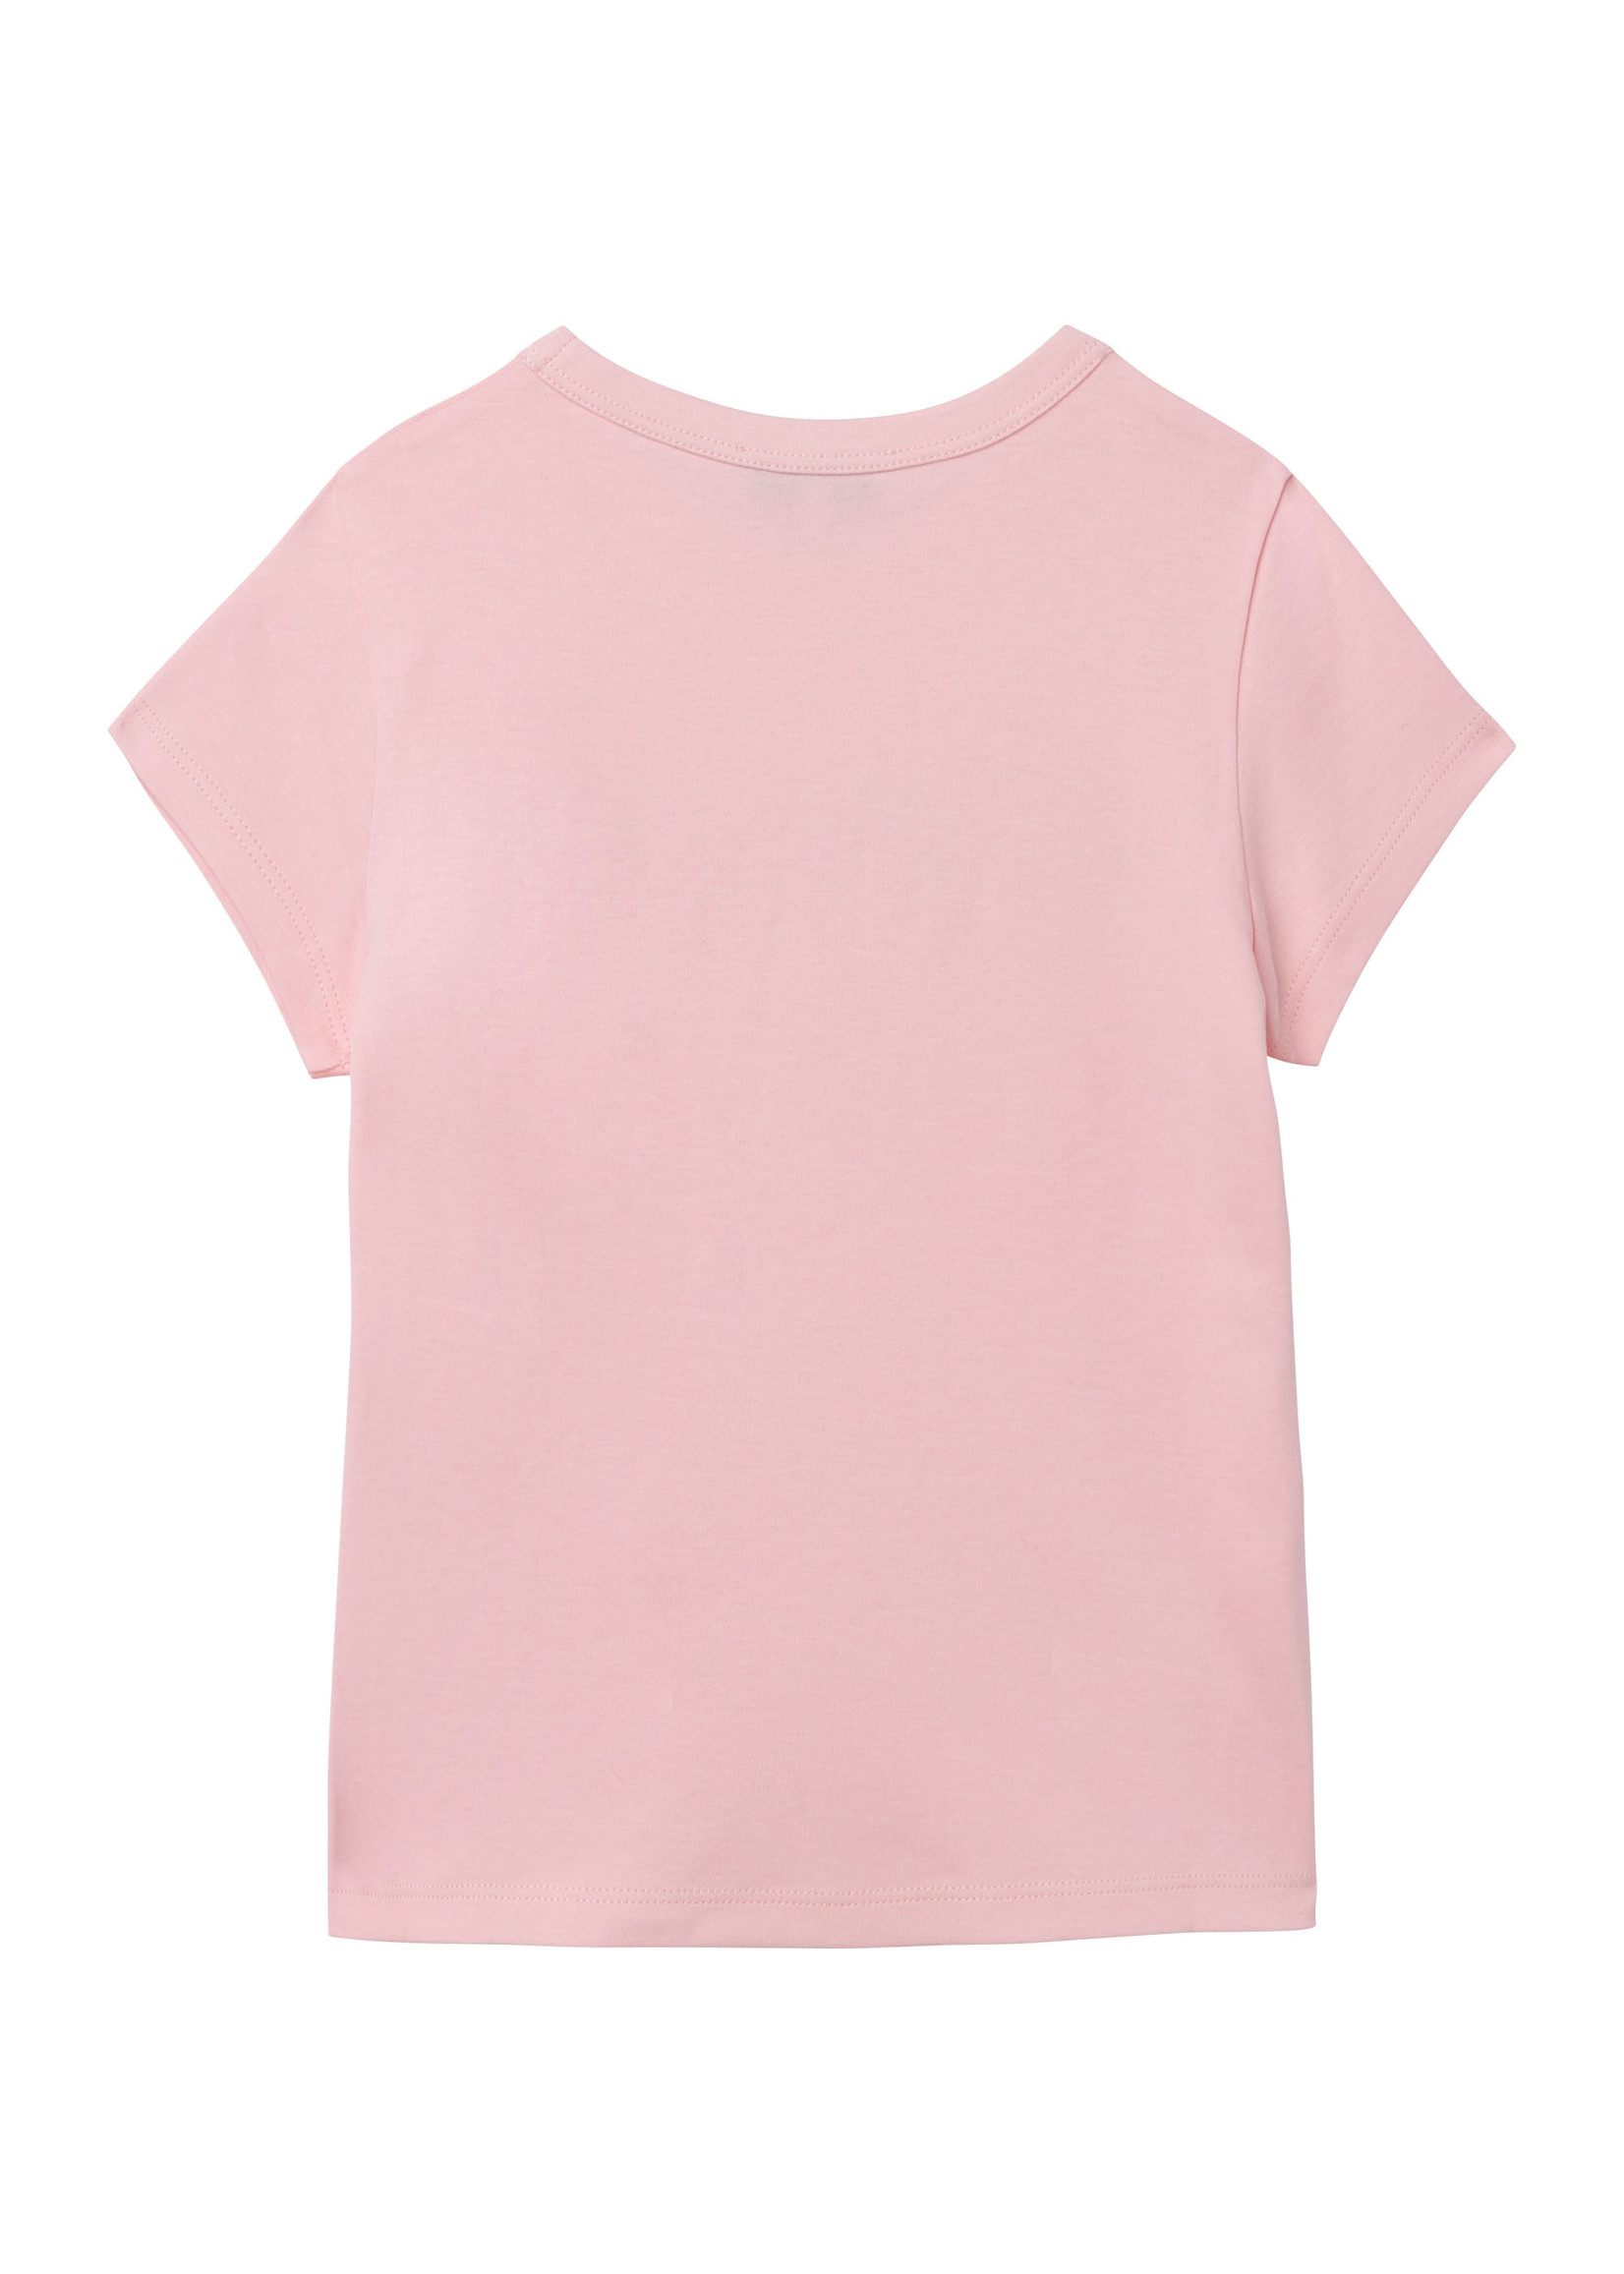 Lanvin Lanvin Tshirt roze - N15019